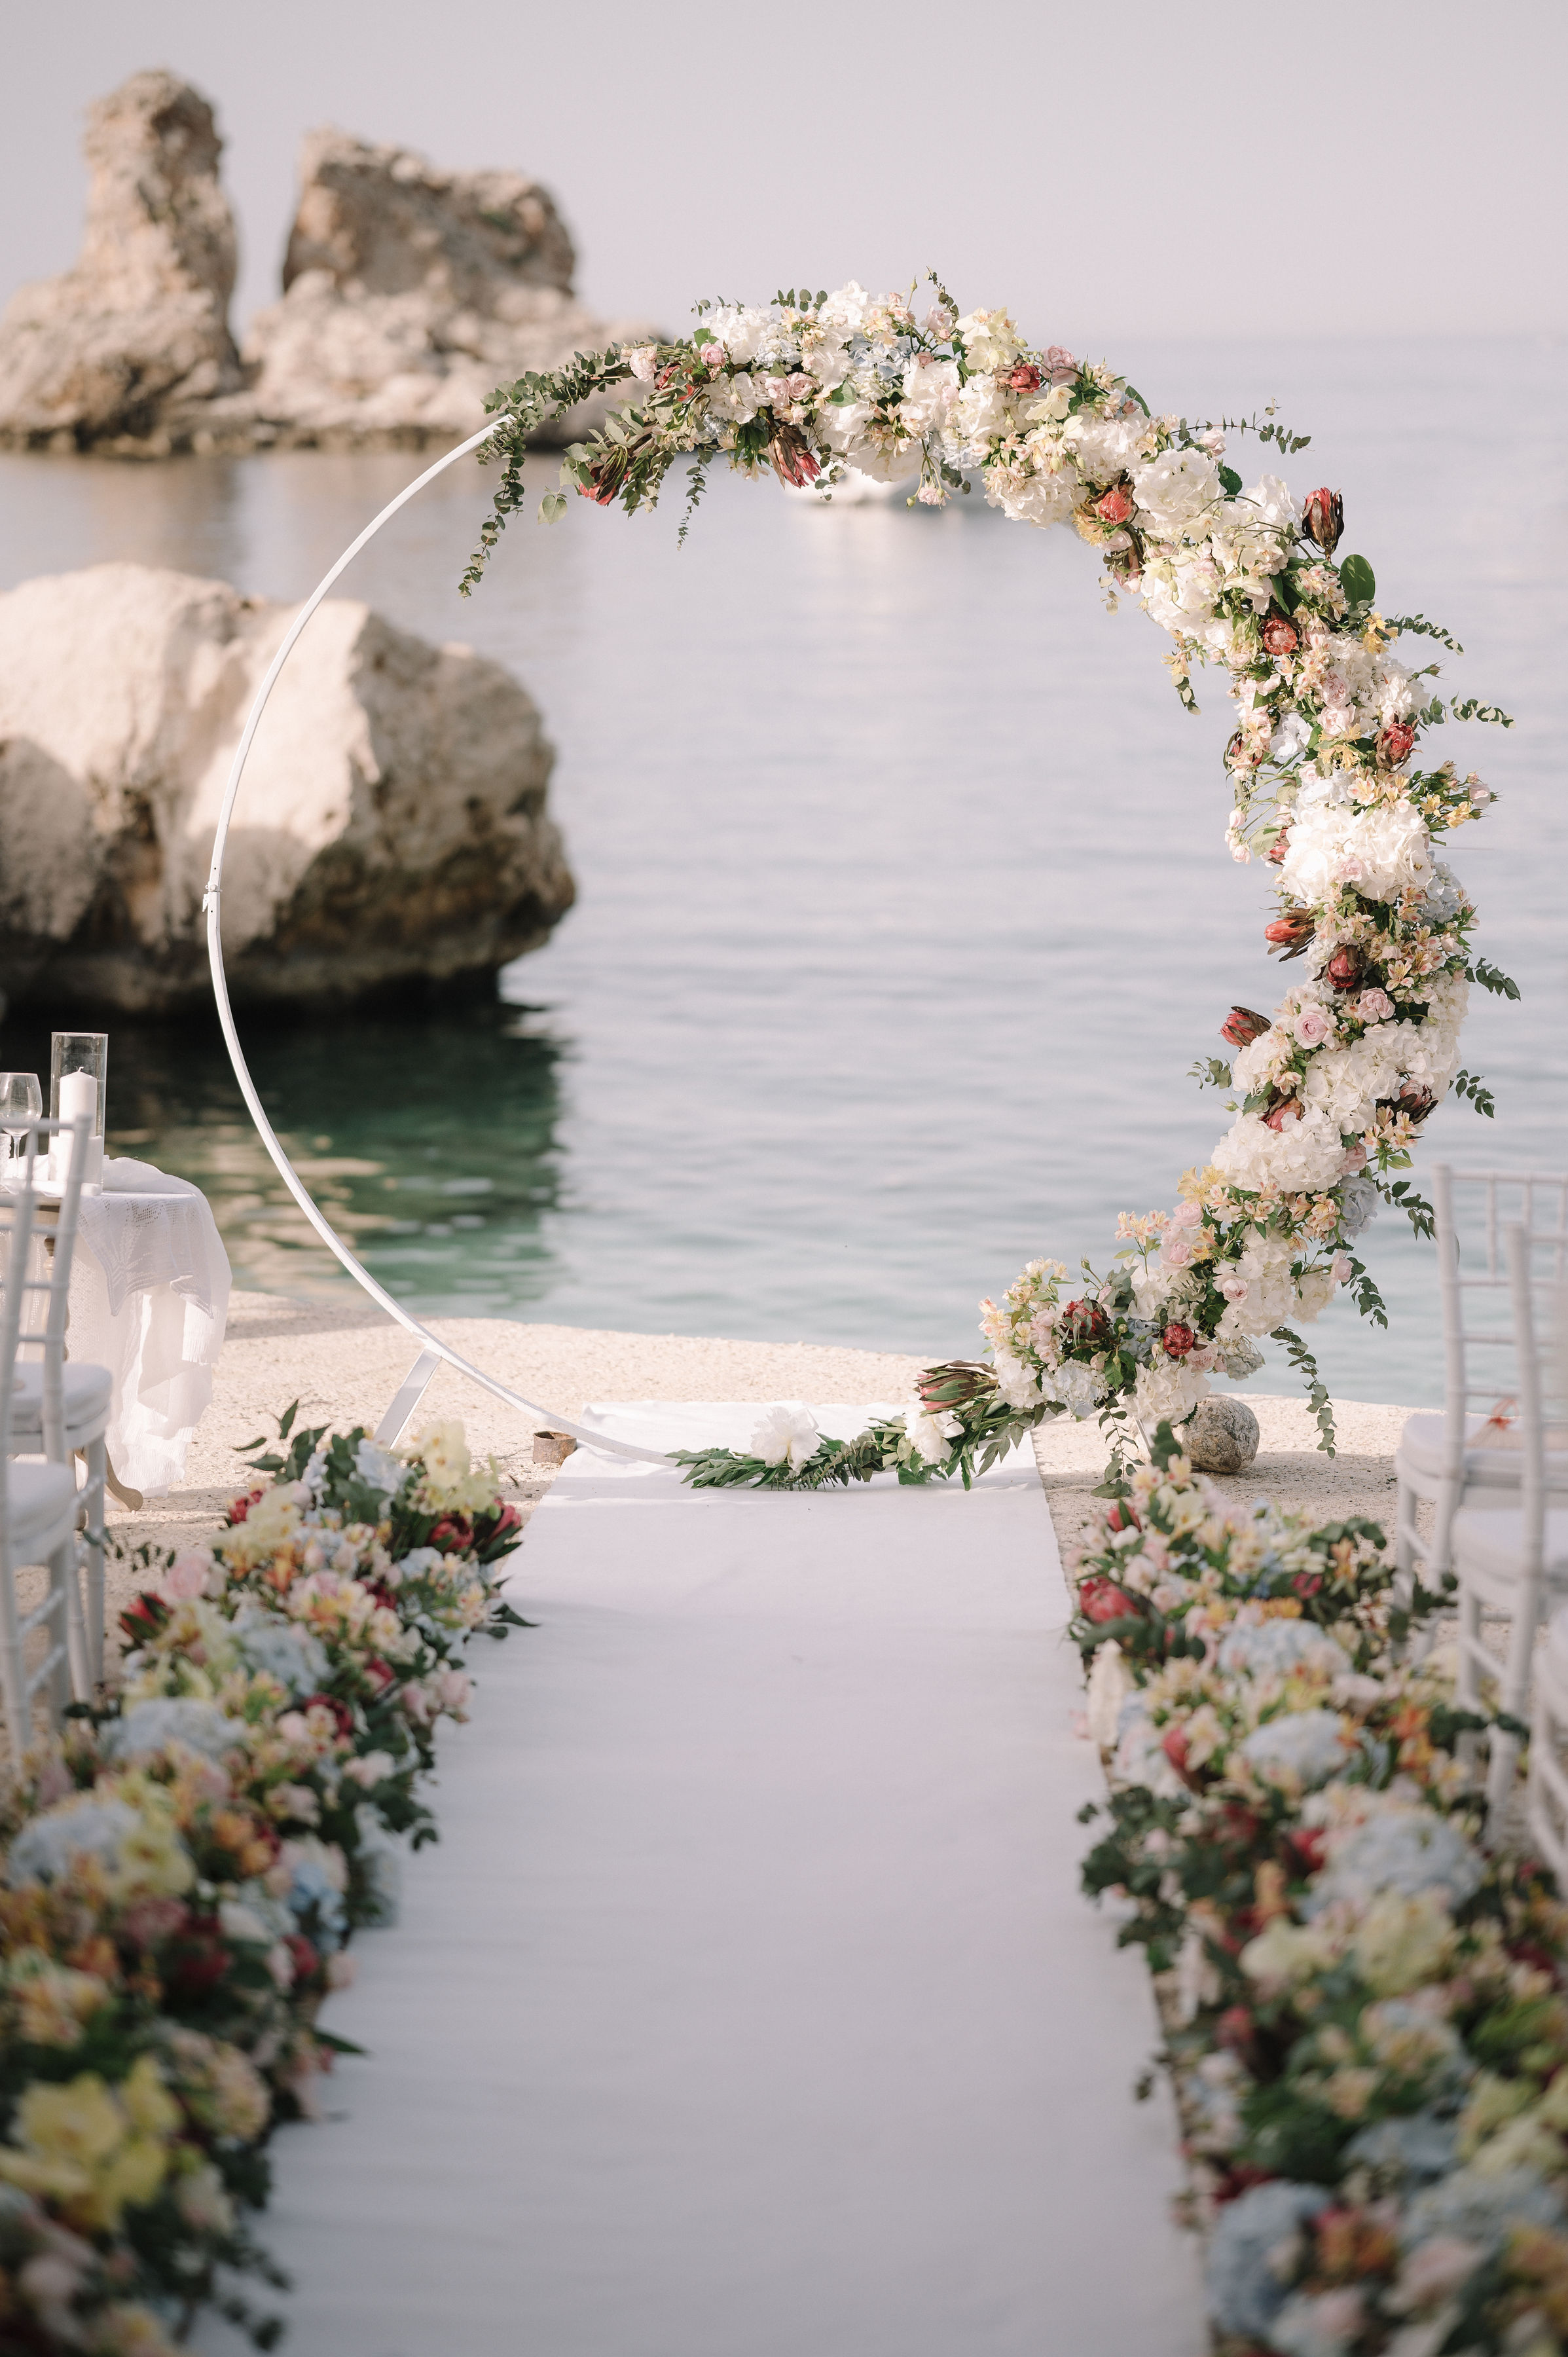 Tonnara Di Scopello wedding venue in Sicily // Photo Credit Rosita Lipari Wedding